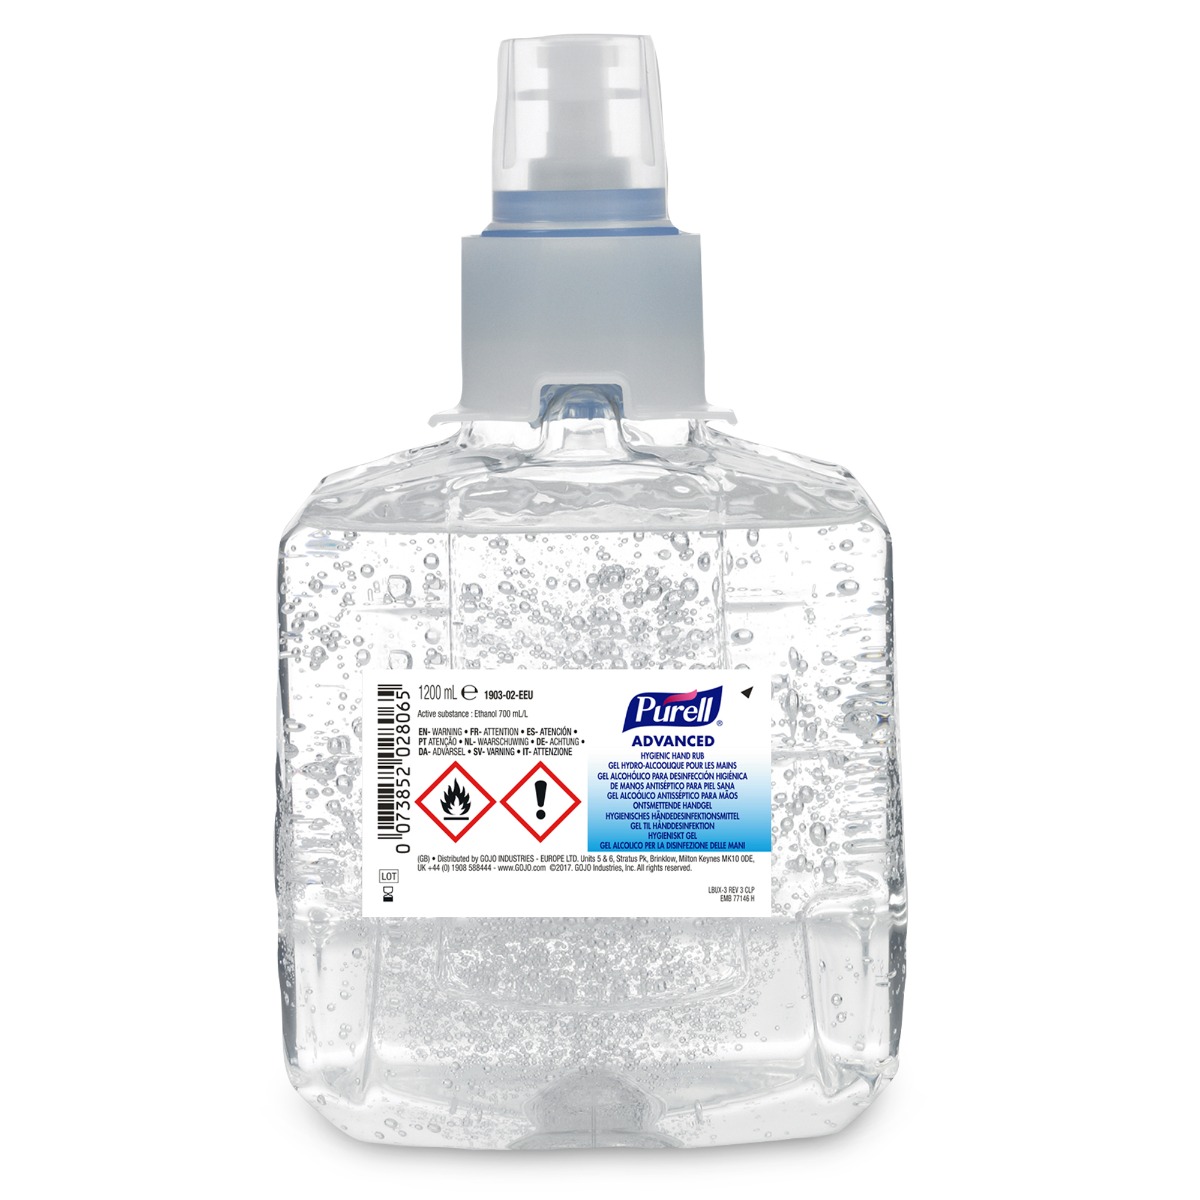 Purell Advanced Hygienic Hand Rub, hånddesinfektion i gelform, 1200 ml.